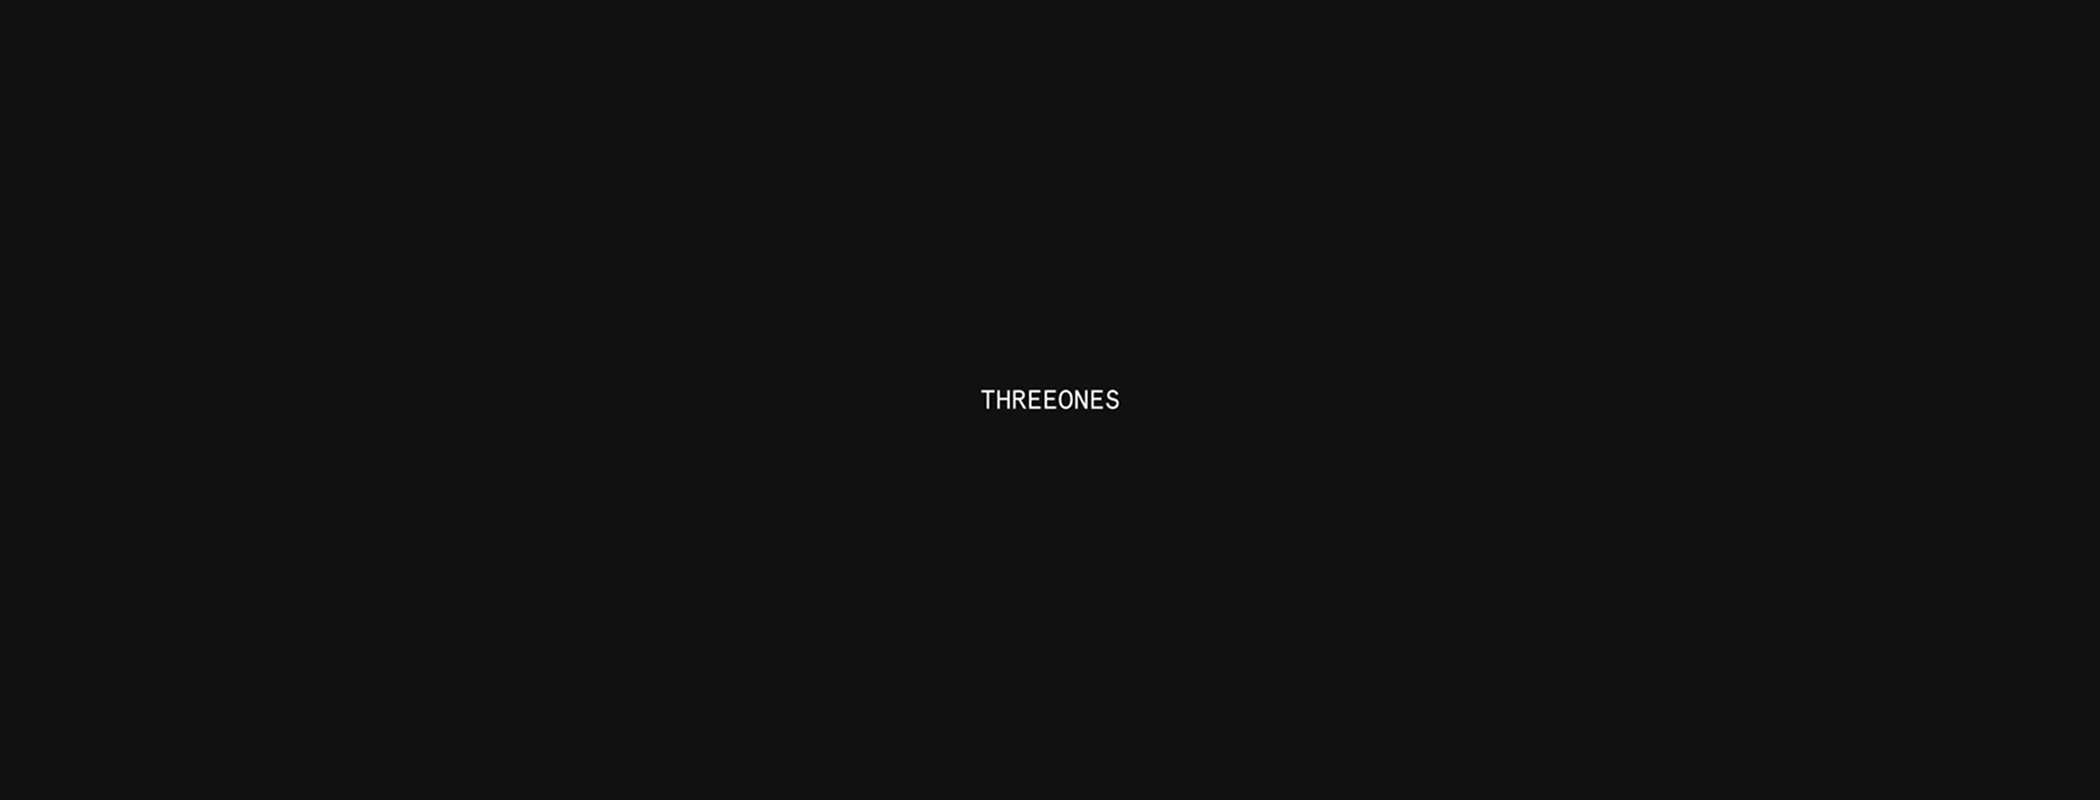 threeones-02_0